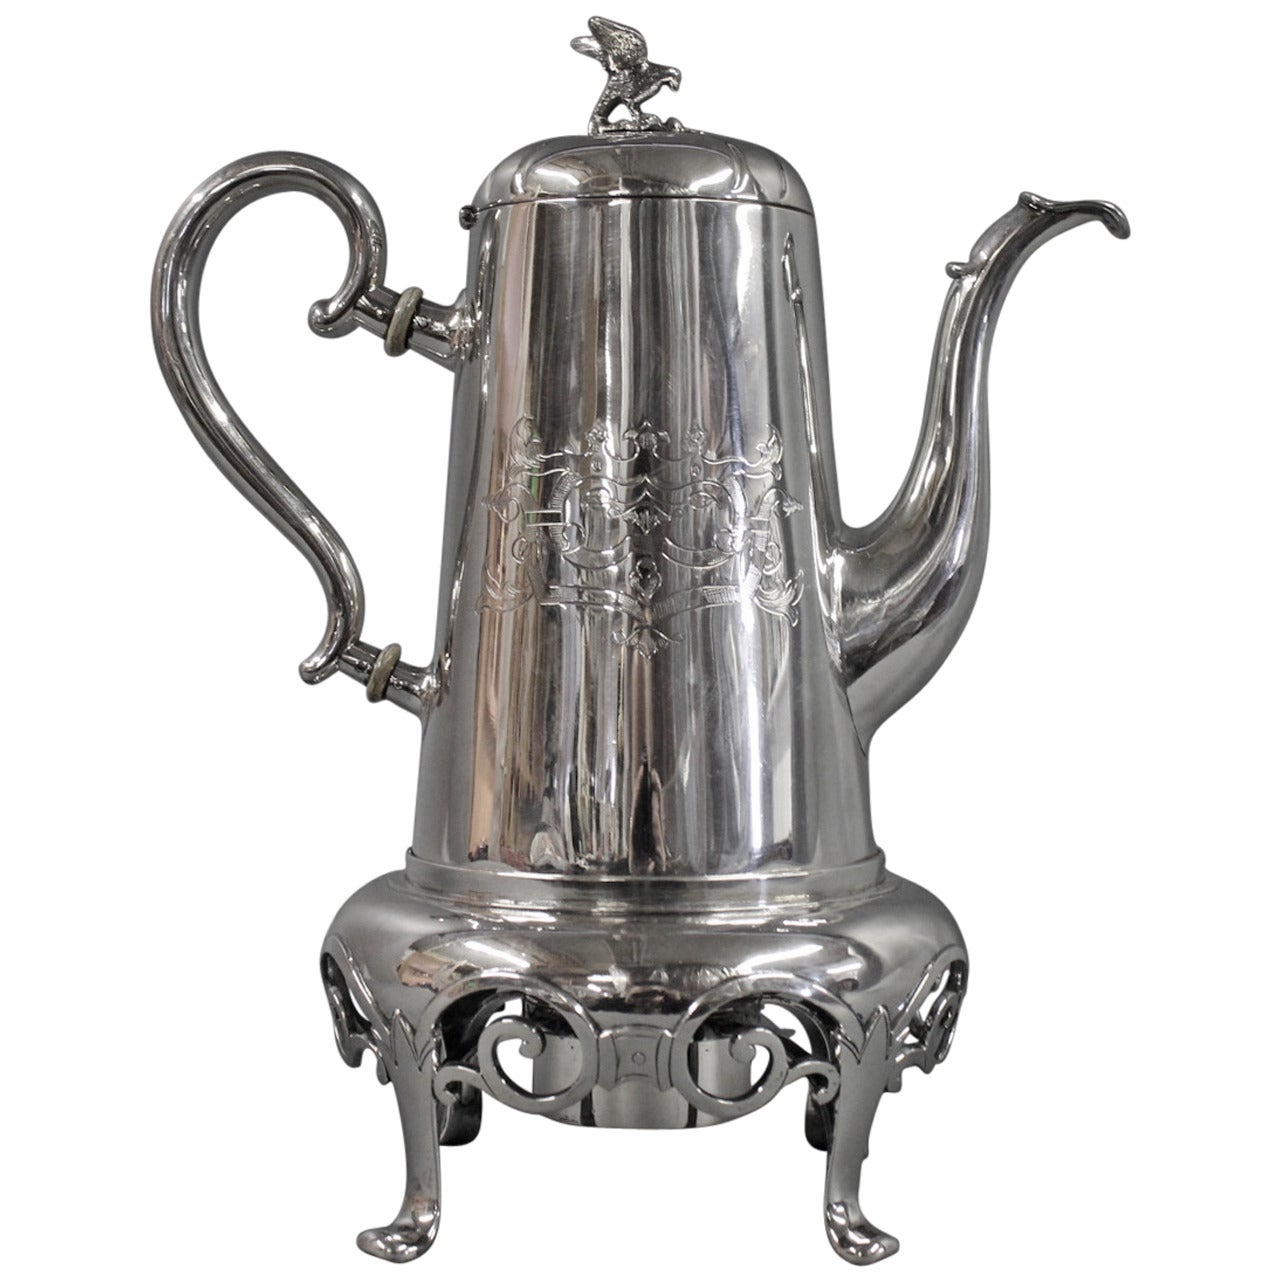 Anton Michelsen Unique Coffee Pot in Real Three Tower Silver, c. 1854